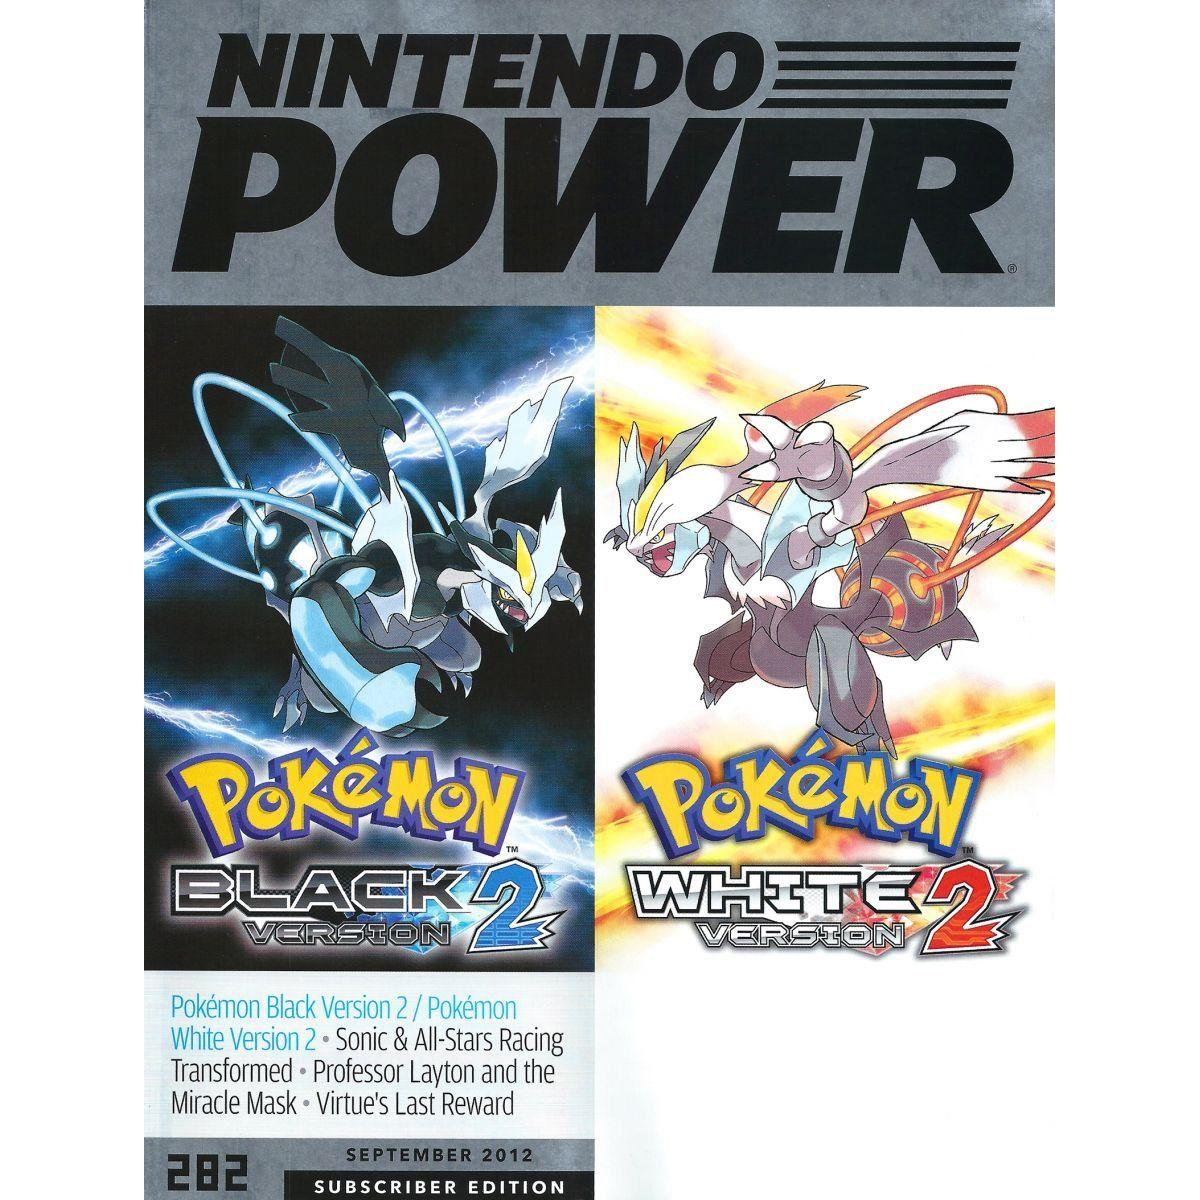 Nintendo Power Magazine (#282 Subscriber Edition) - Complet et/ou bon état